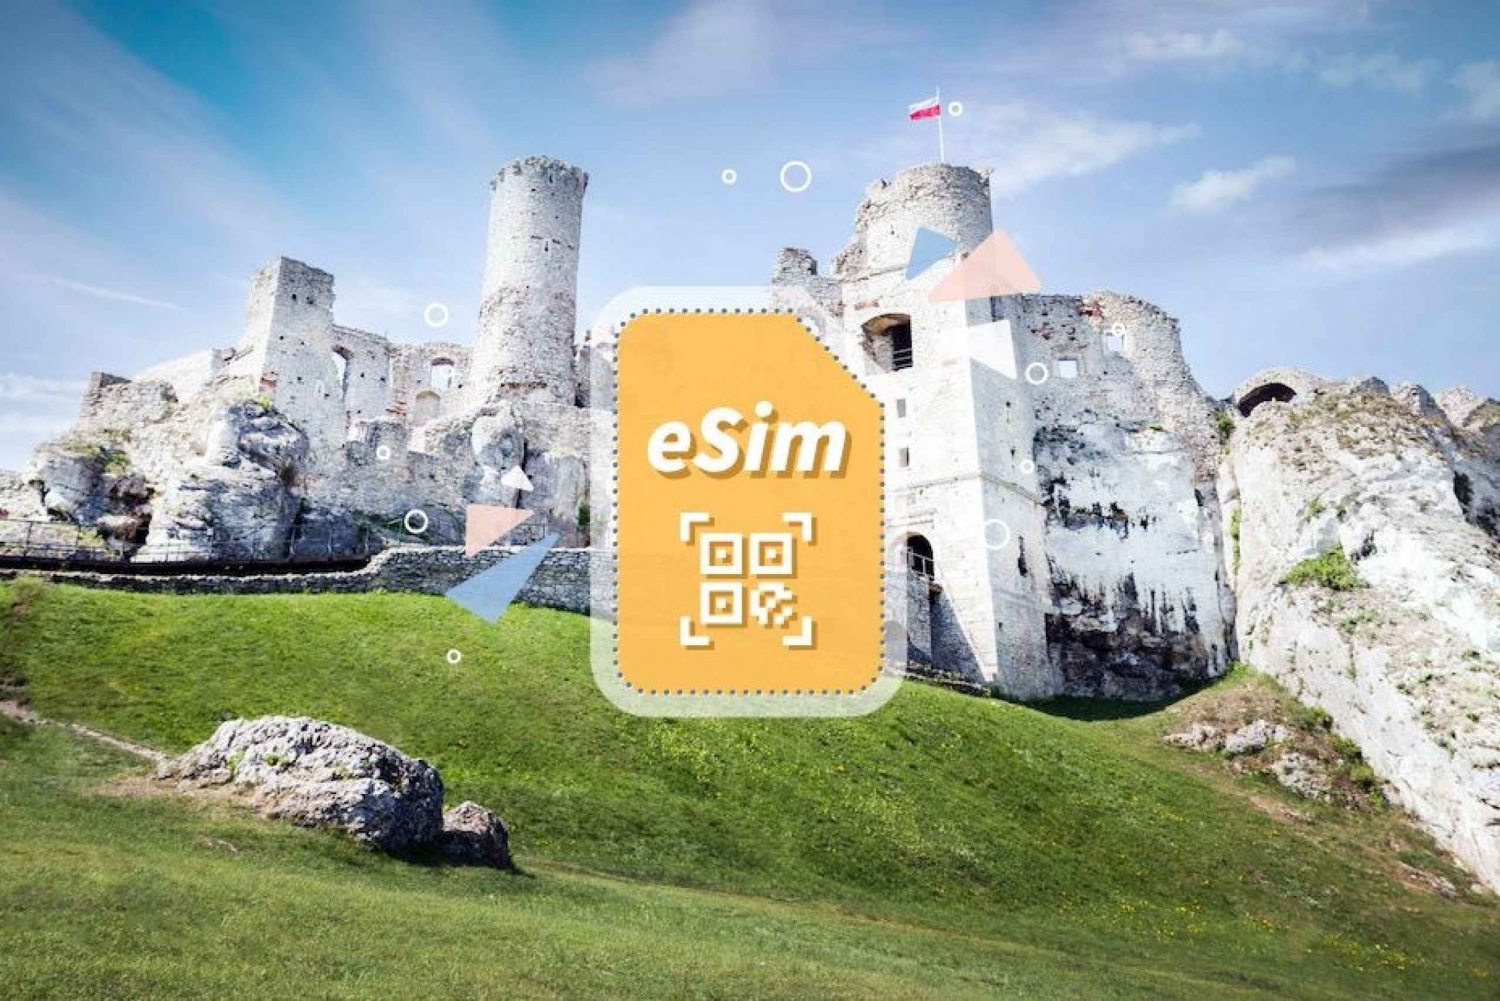 Pologne/Europe : Plan de données mobiles 5G eSim